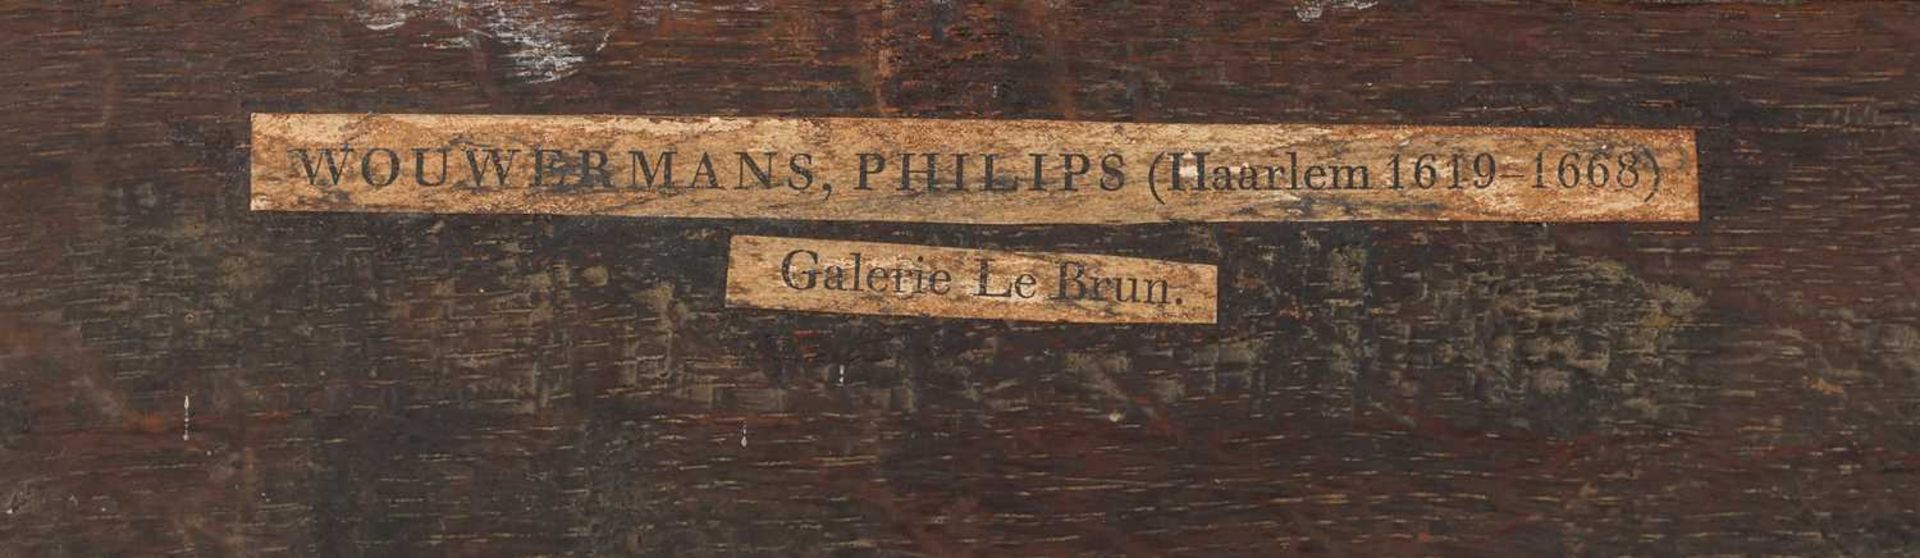 PHILIPS WOUWERMAN (1619 Haarlem - 1668 ebenda) zugeschrieben - Bild 2 aus 5